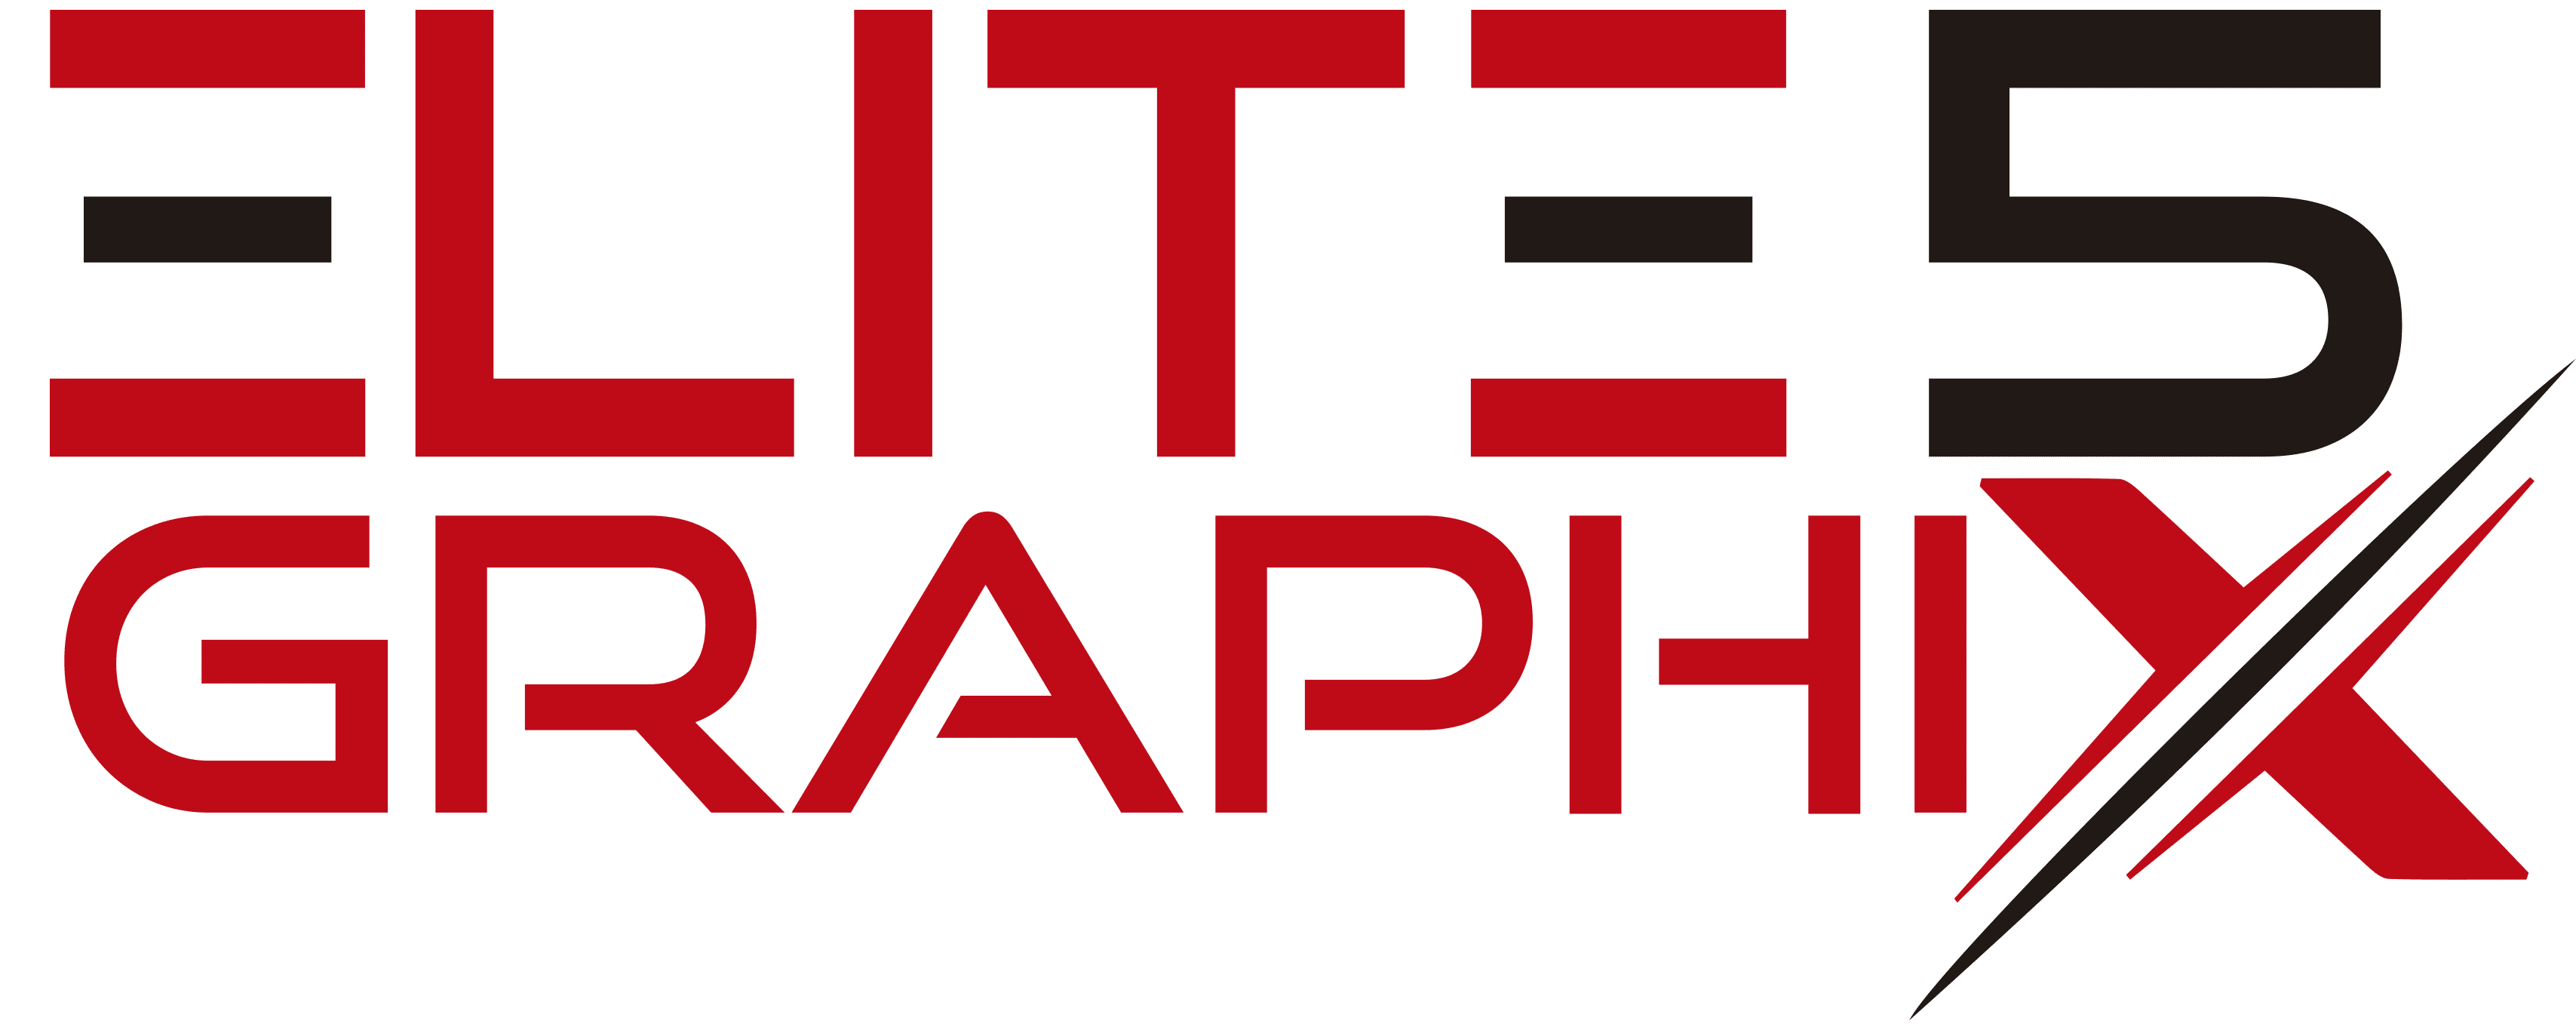 Elite 5 GraphiX LLC.